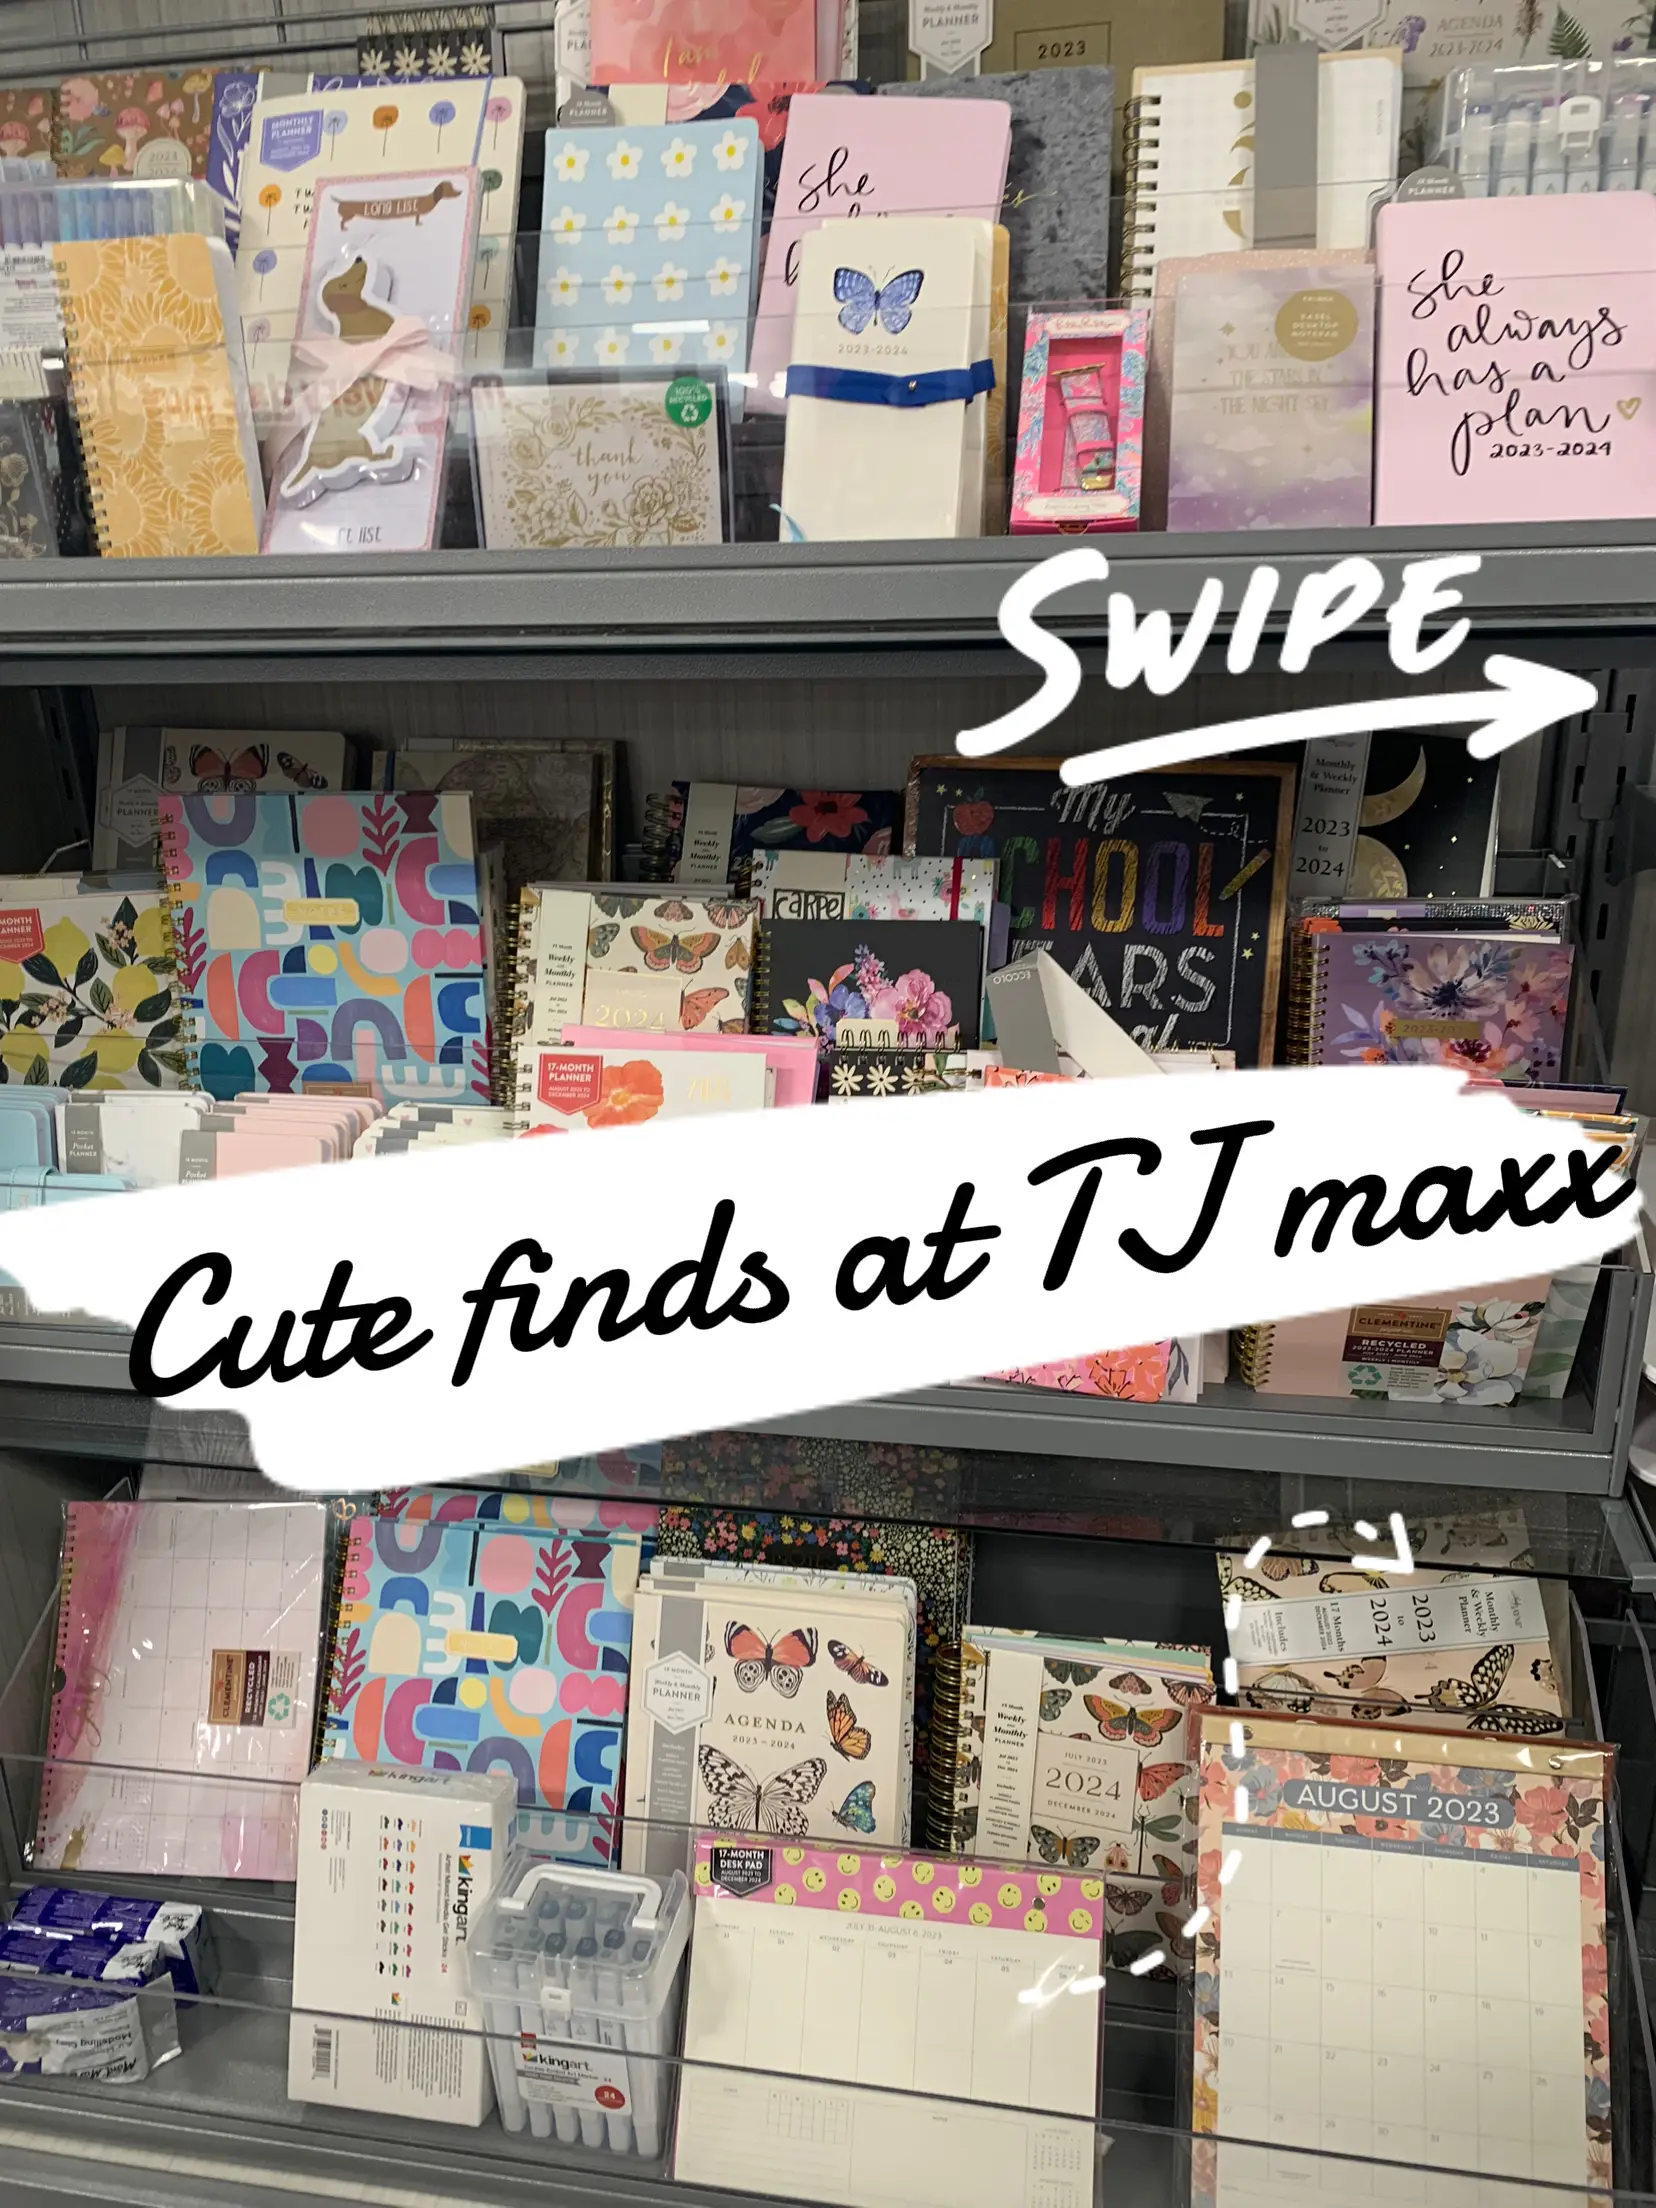 Cutest Shelf Liners for Organizing - Found Them at TJMaxx!